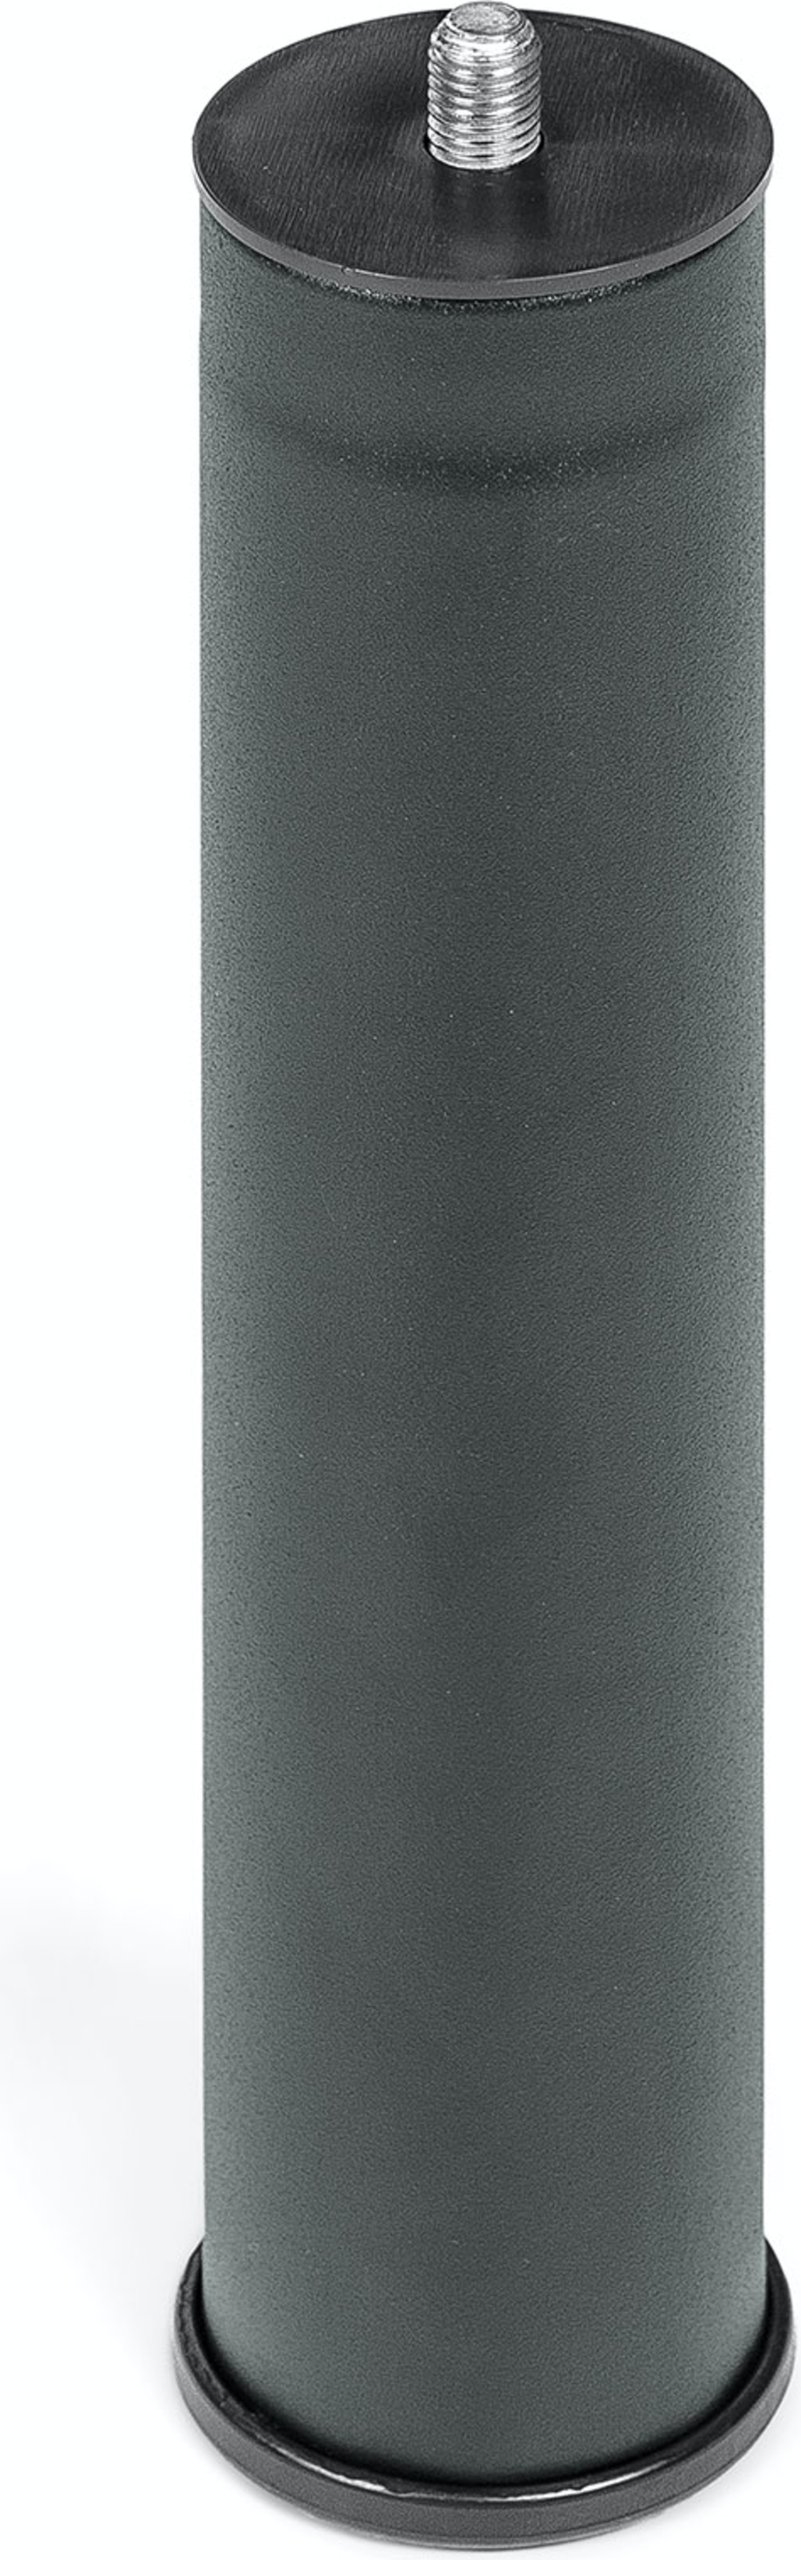 10: Sengeben / sofaben, M10, metal by LaForma (H: 25 cm. B: 5 cm. L: 5 cm., Sort)